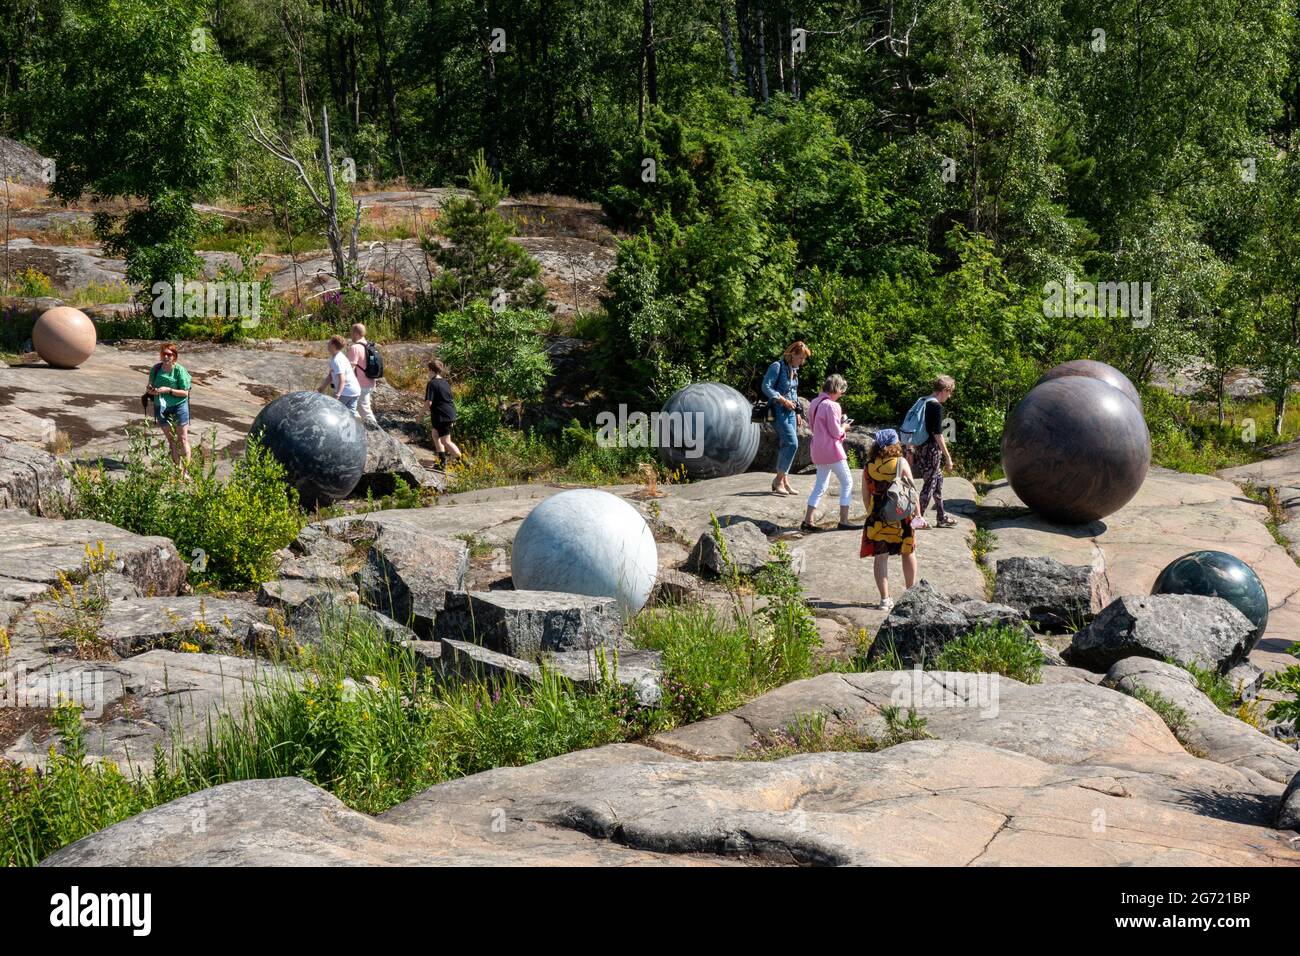 Large stone globes, part of Pars Pro Toto sculpture by Alicja Kwade at Helsinki Biennial 2021 art event in Vallisaari Island of Helsinki, Finland Stock Photo